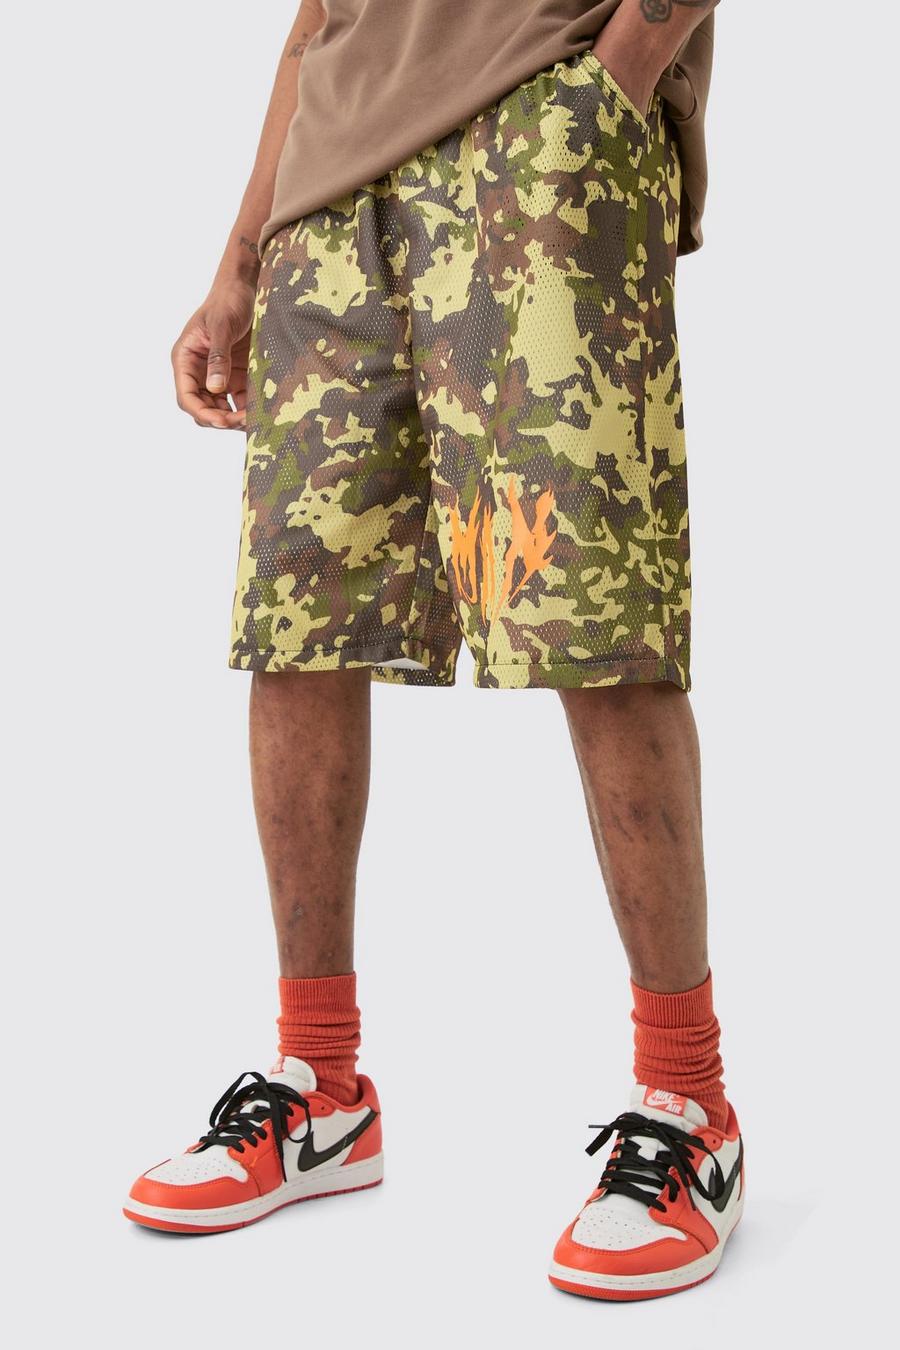 Pantaloncini da basket Tall Man in Airtex in fantasia militare, Multi